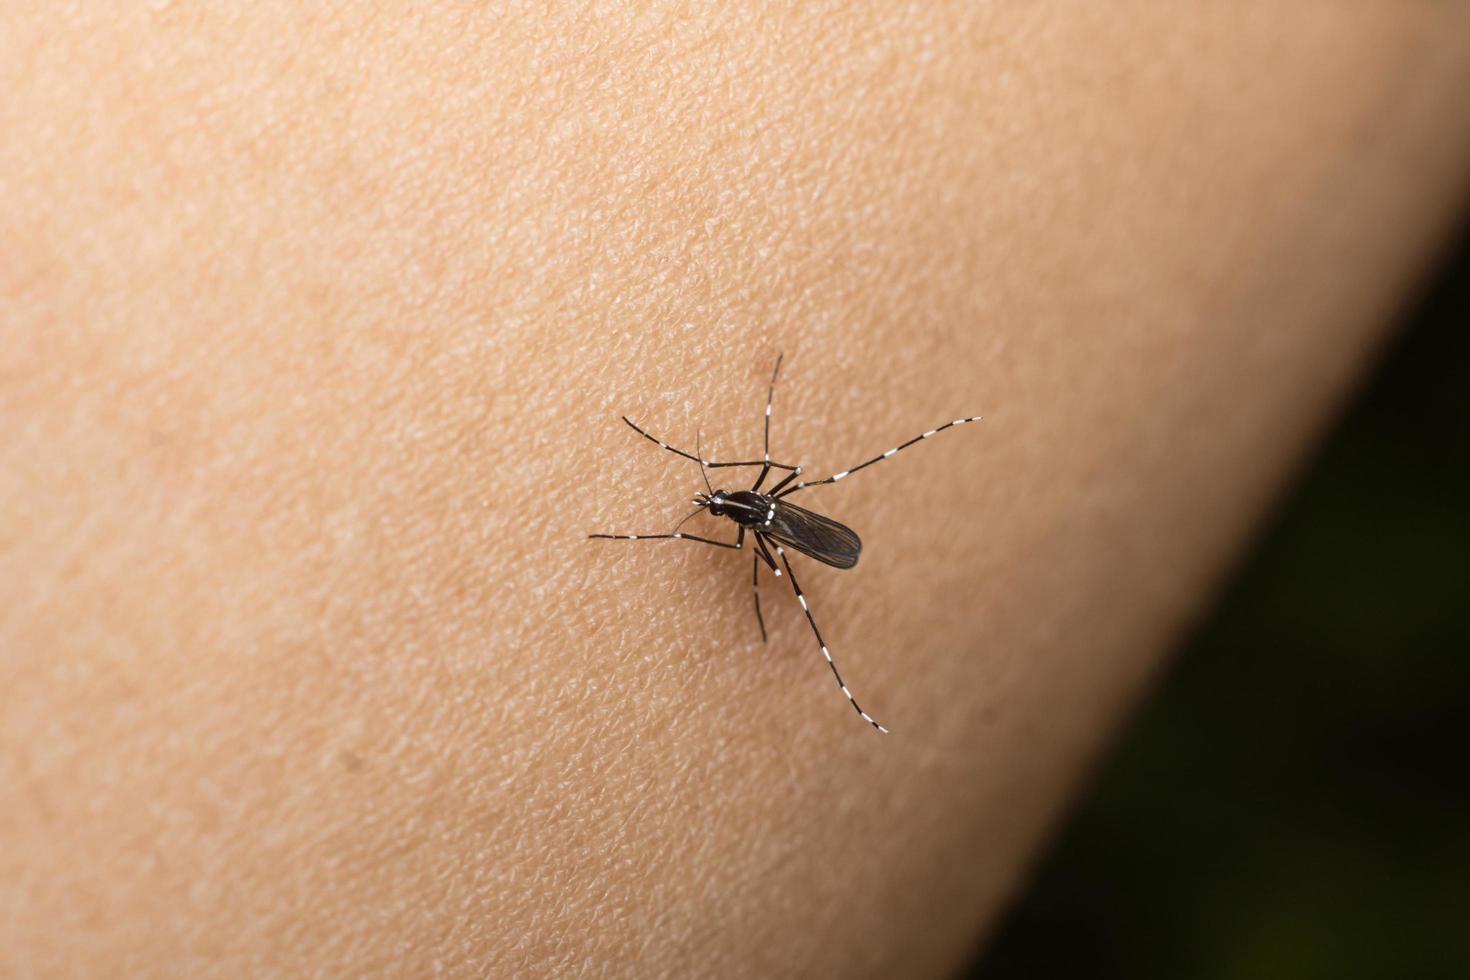 mosquito bite dangerous malaria fiverr macro photography premium photo